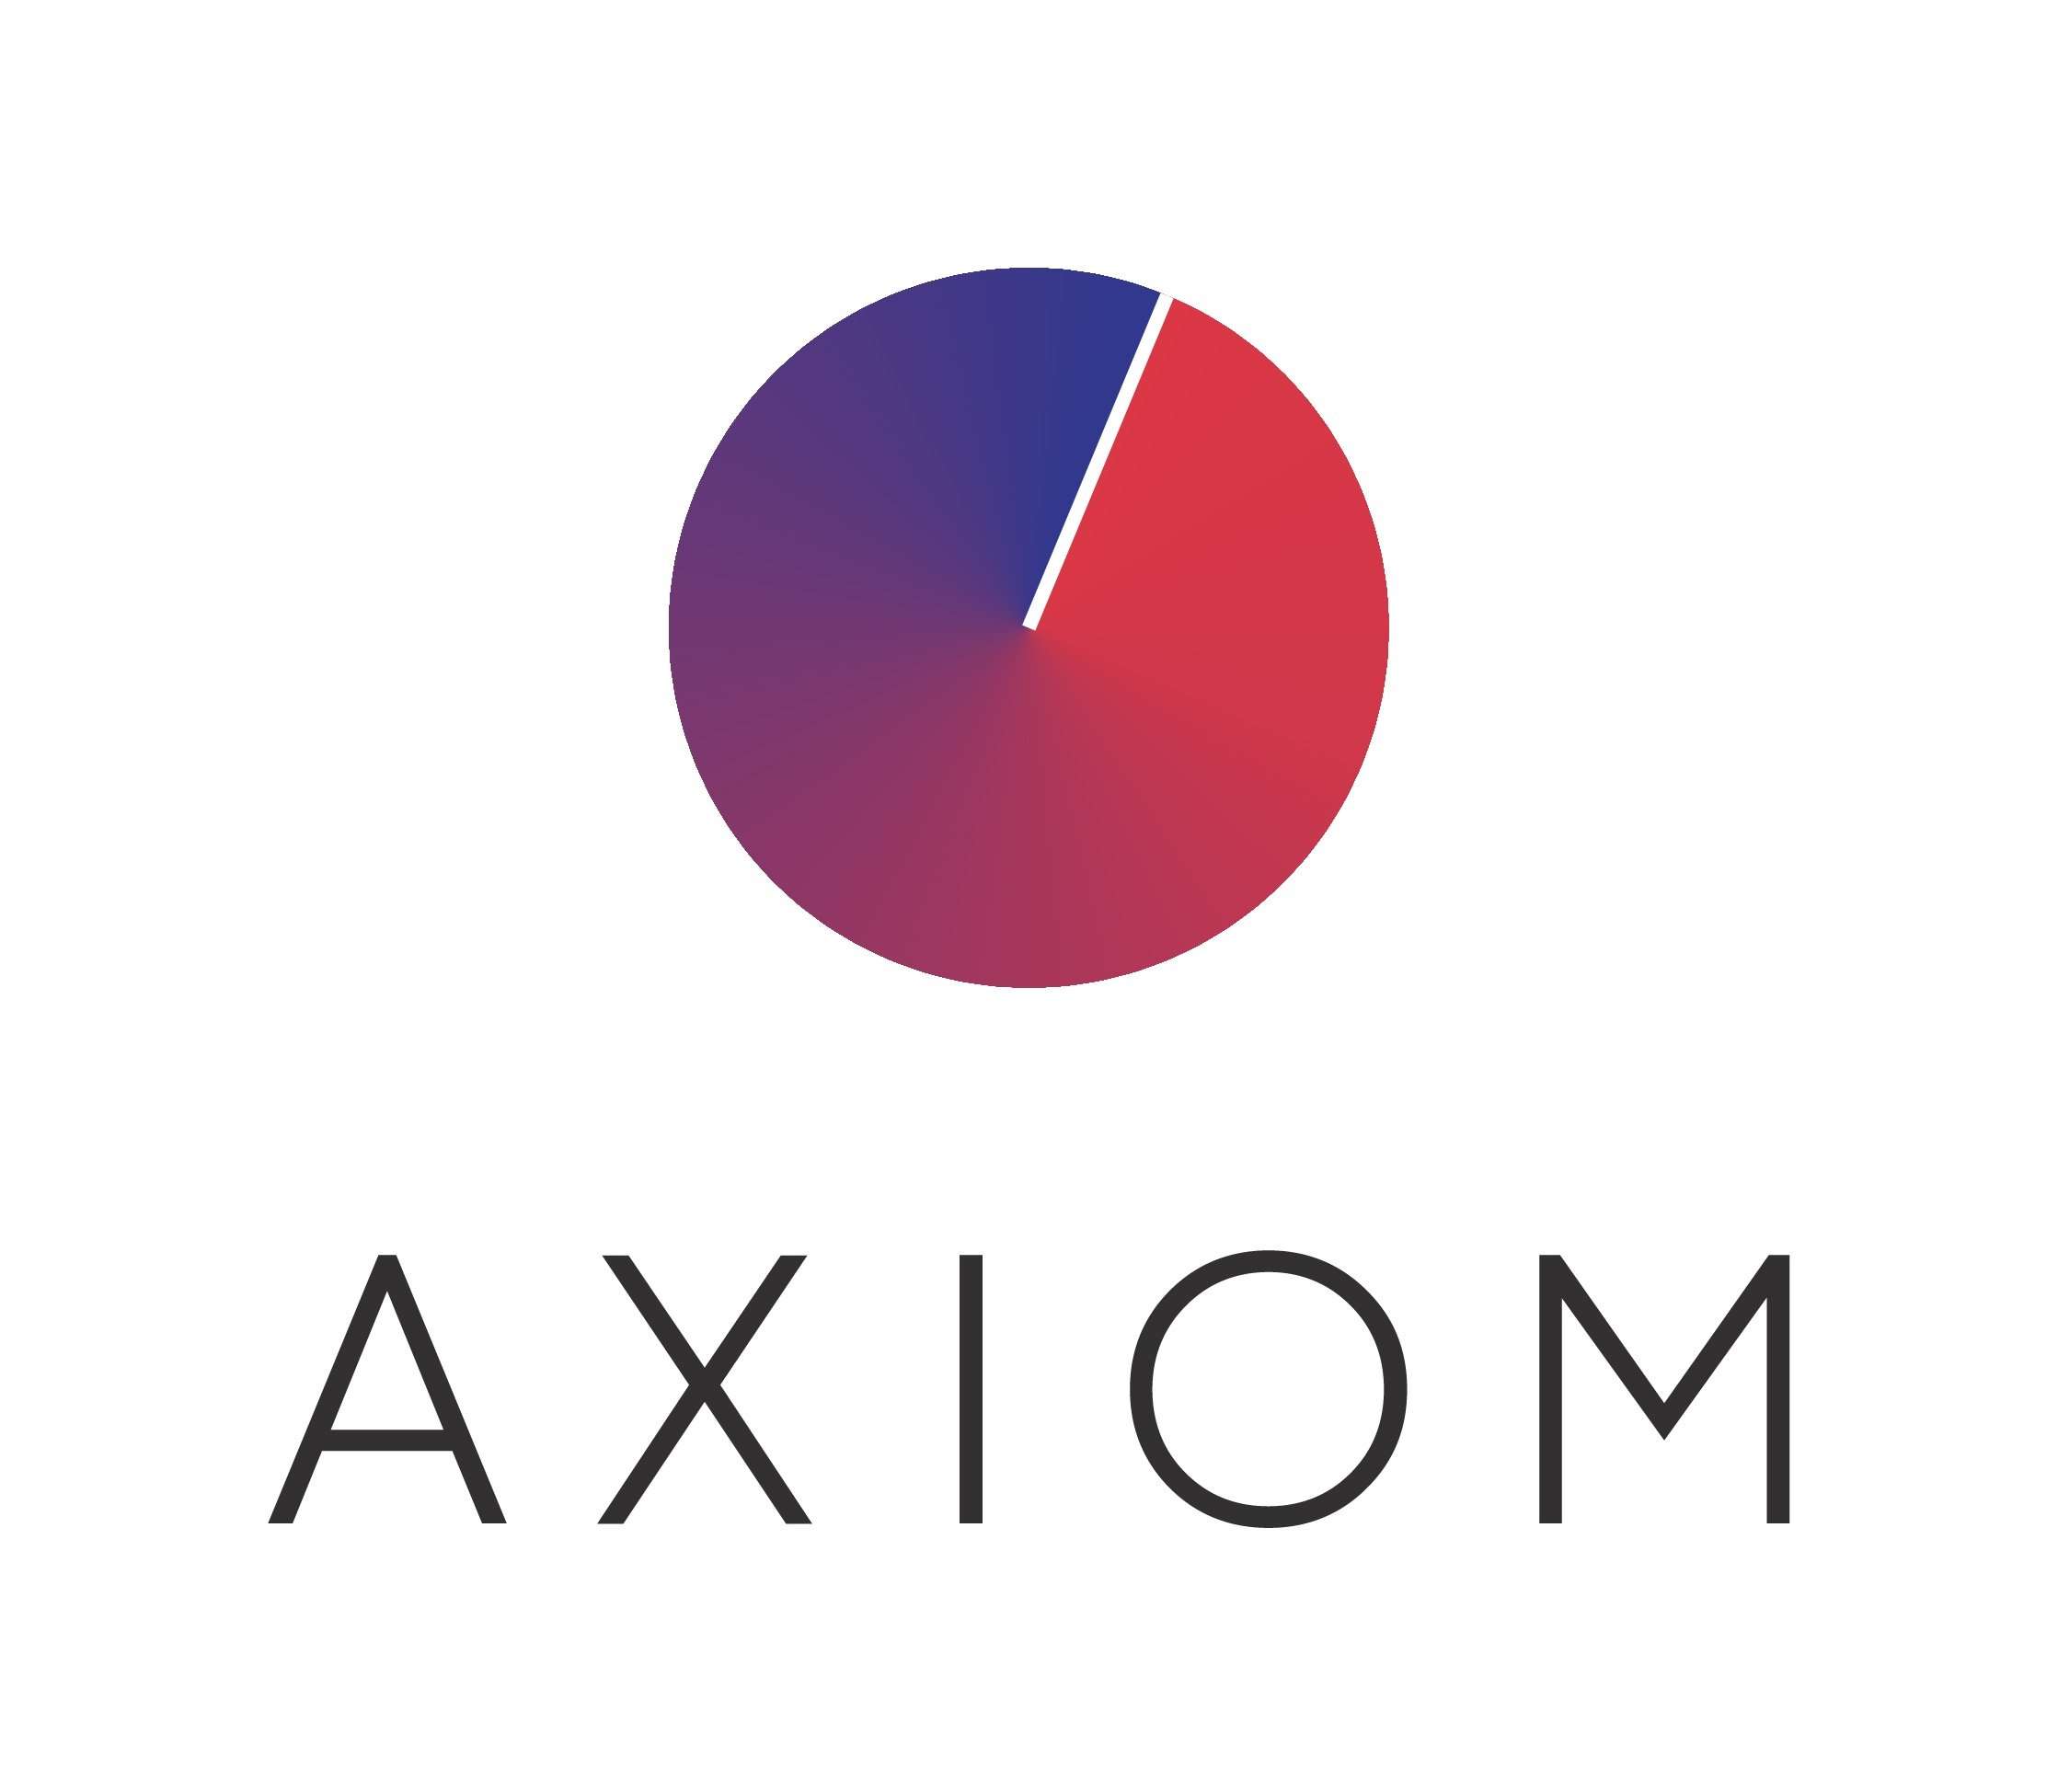 Axiom’s back-to-work checklist